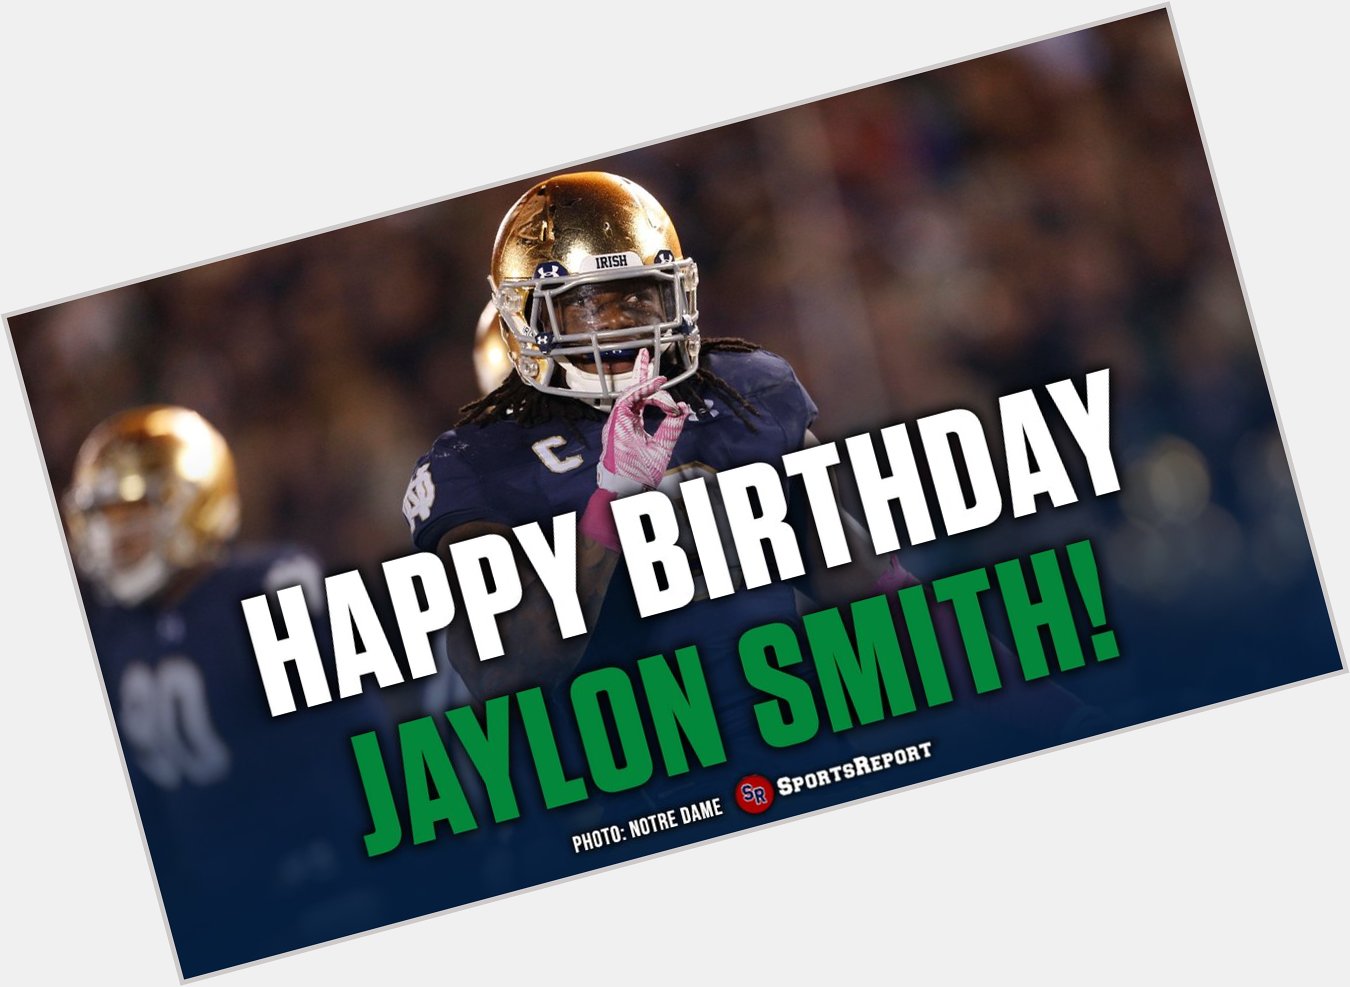 Notre Dame Fans, let\s wish Jaylon Smith a Happy Birthday! GO  